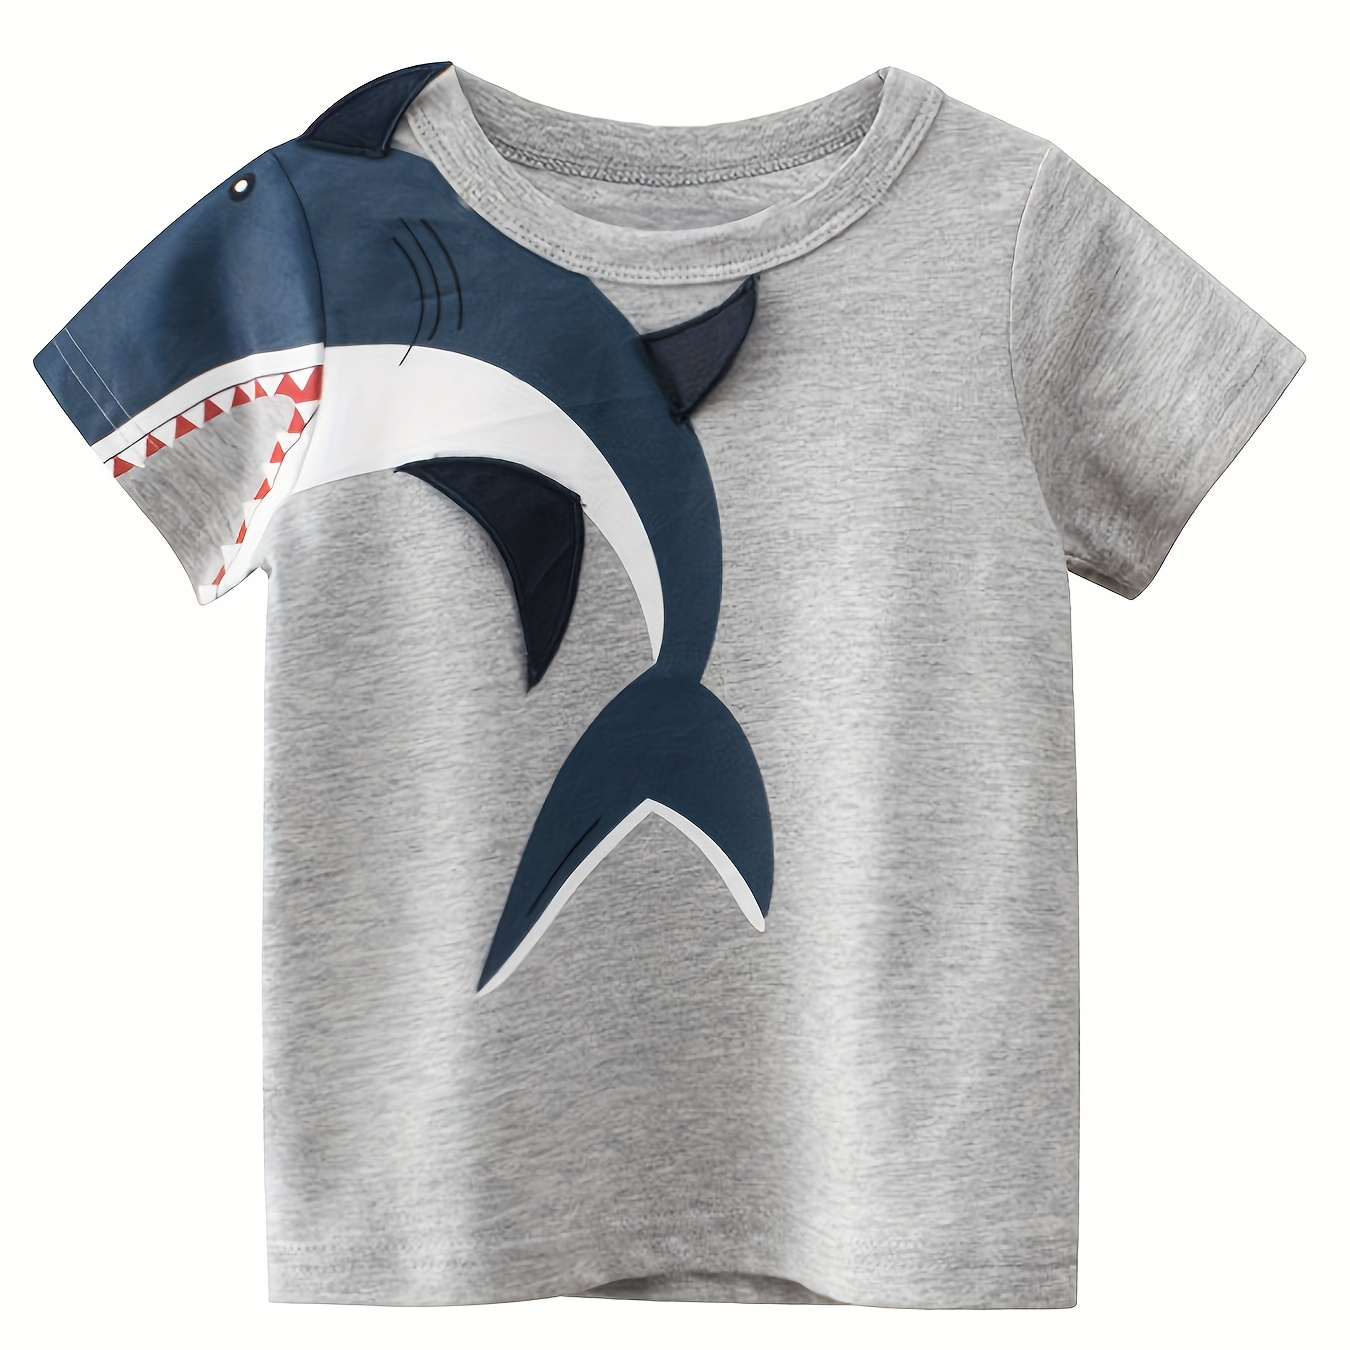 

Boys Cotton Round Neck T-shirt Three-dimensional Shark Print Grey Short Sleeve Tees Top Summer Clothes